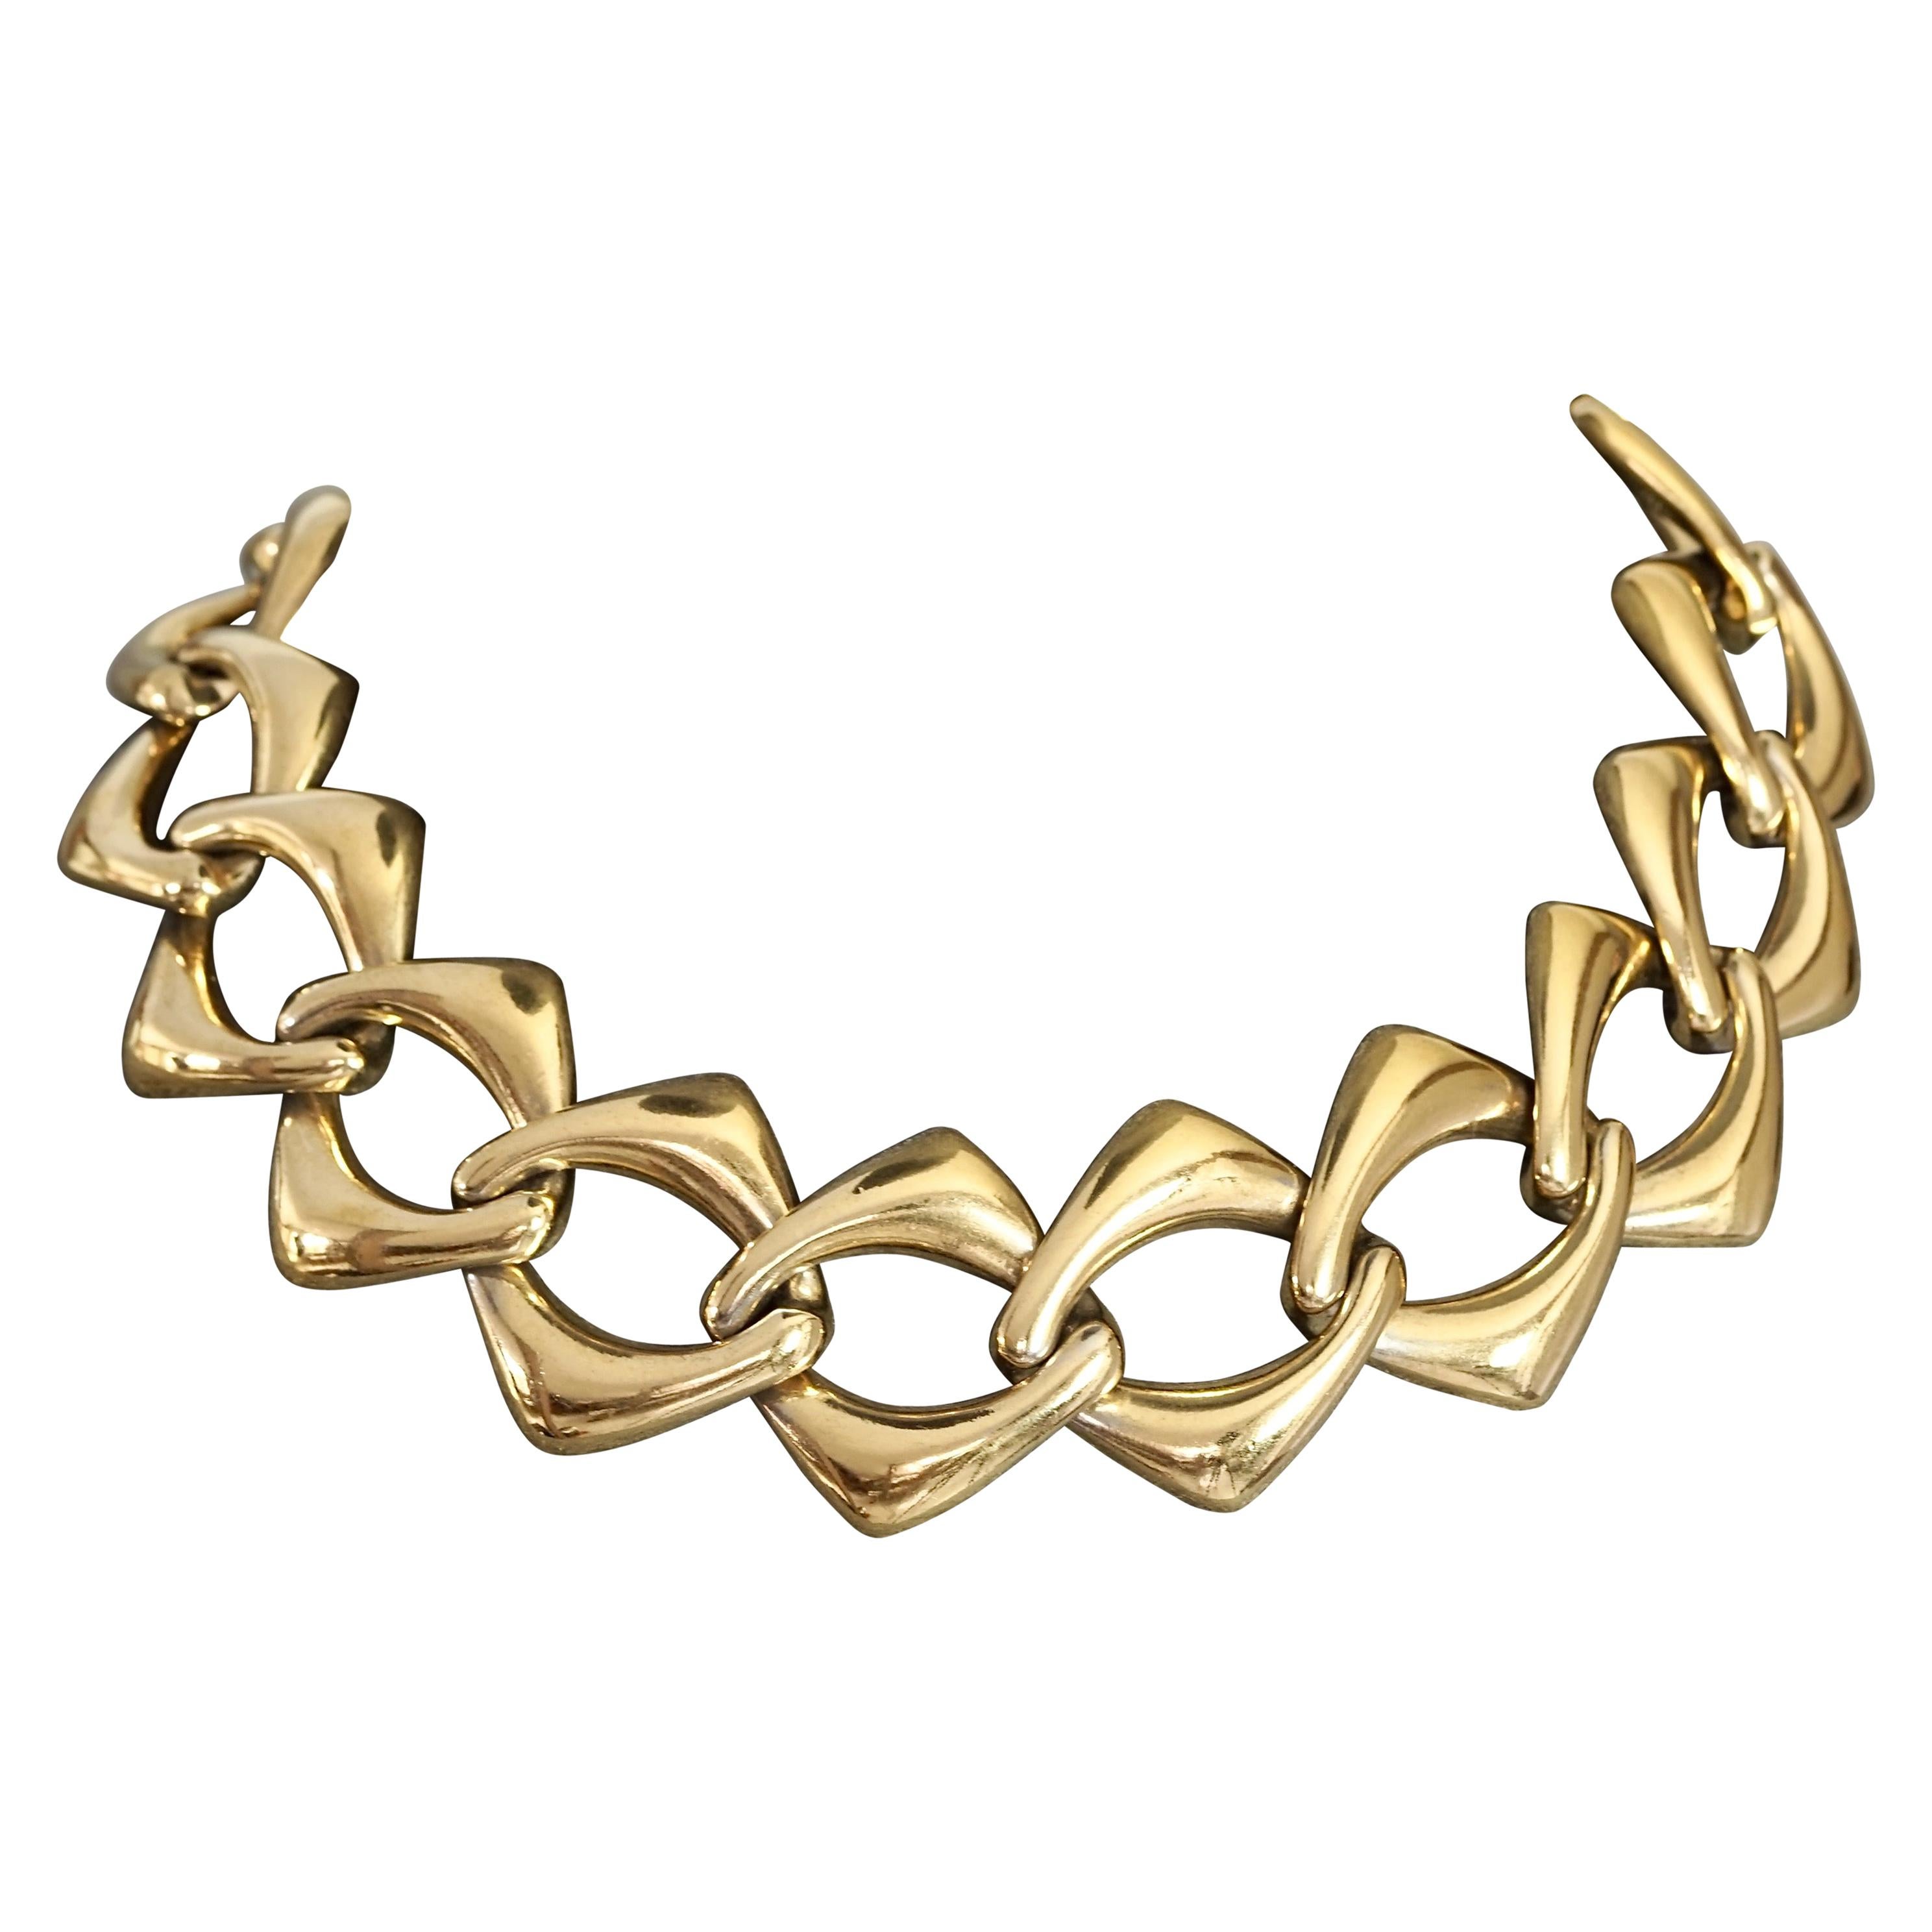 Vintage YVES SAINT LAURENT Ysl by Robert Goossens Chain Choker Necklace For Sale